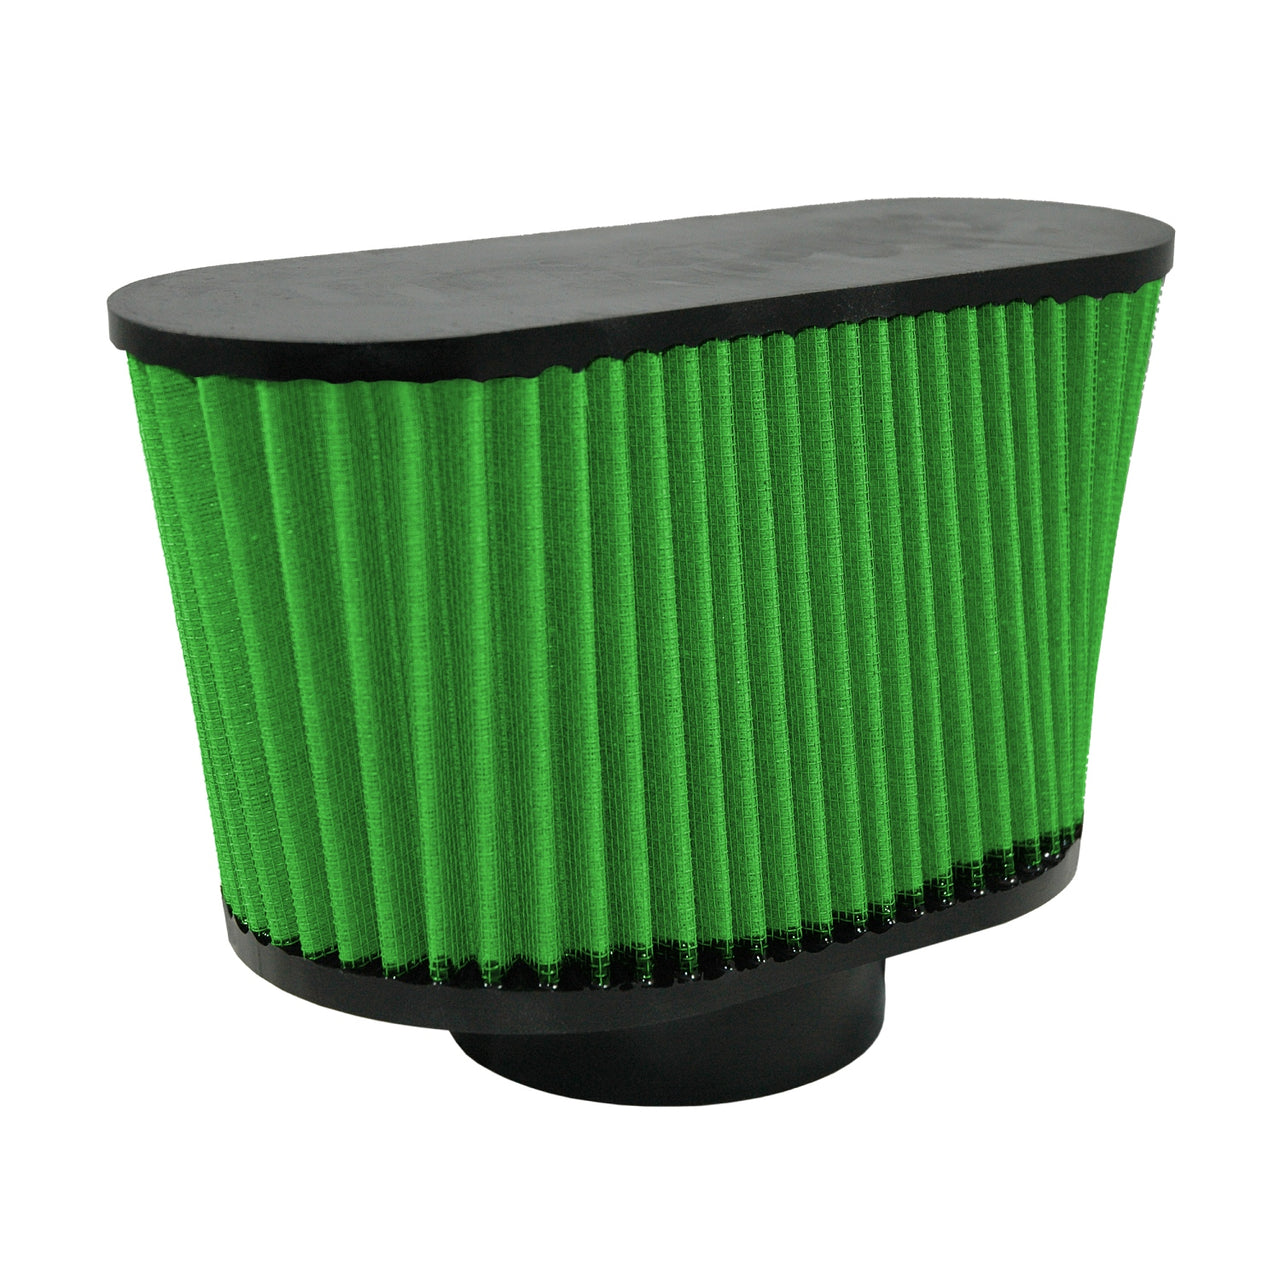 Green Filter Oval Filter - ID 3.5in / Base 8.69in x 5.69in / Top 10.81in x 3.94in / H 6in